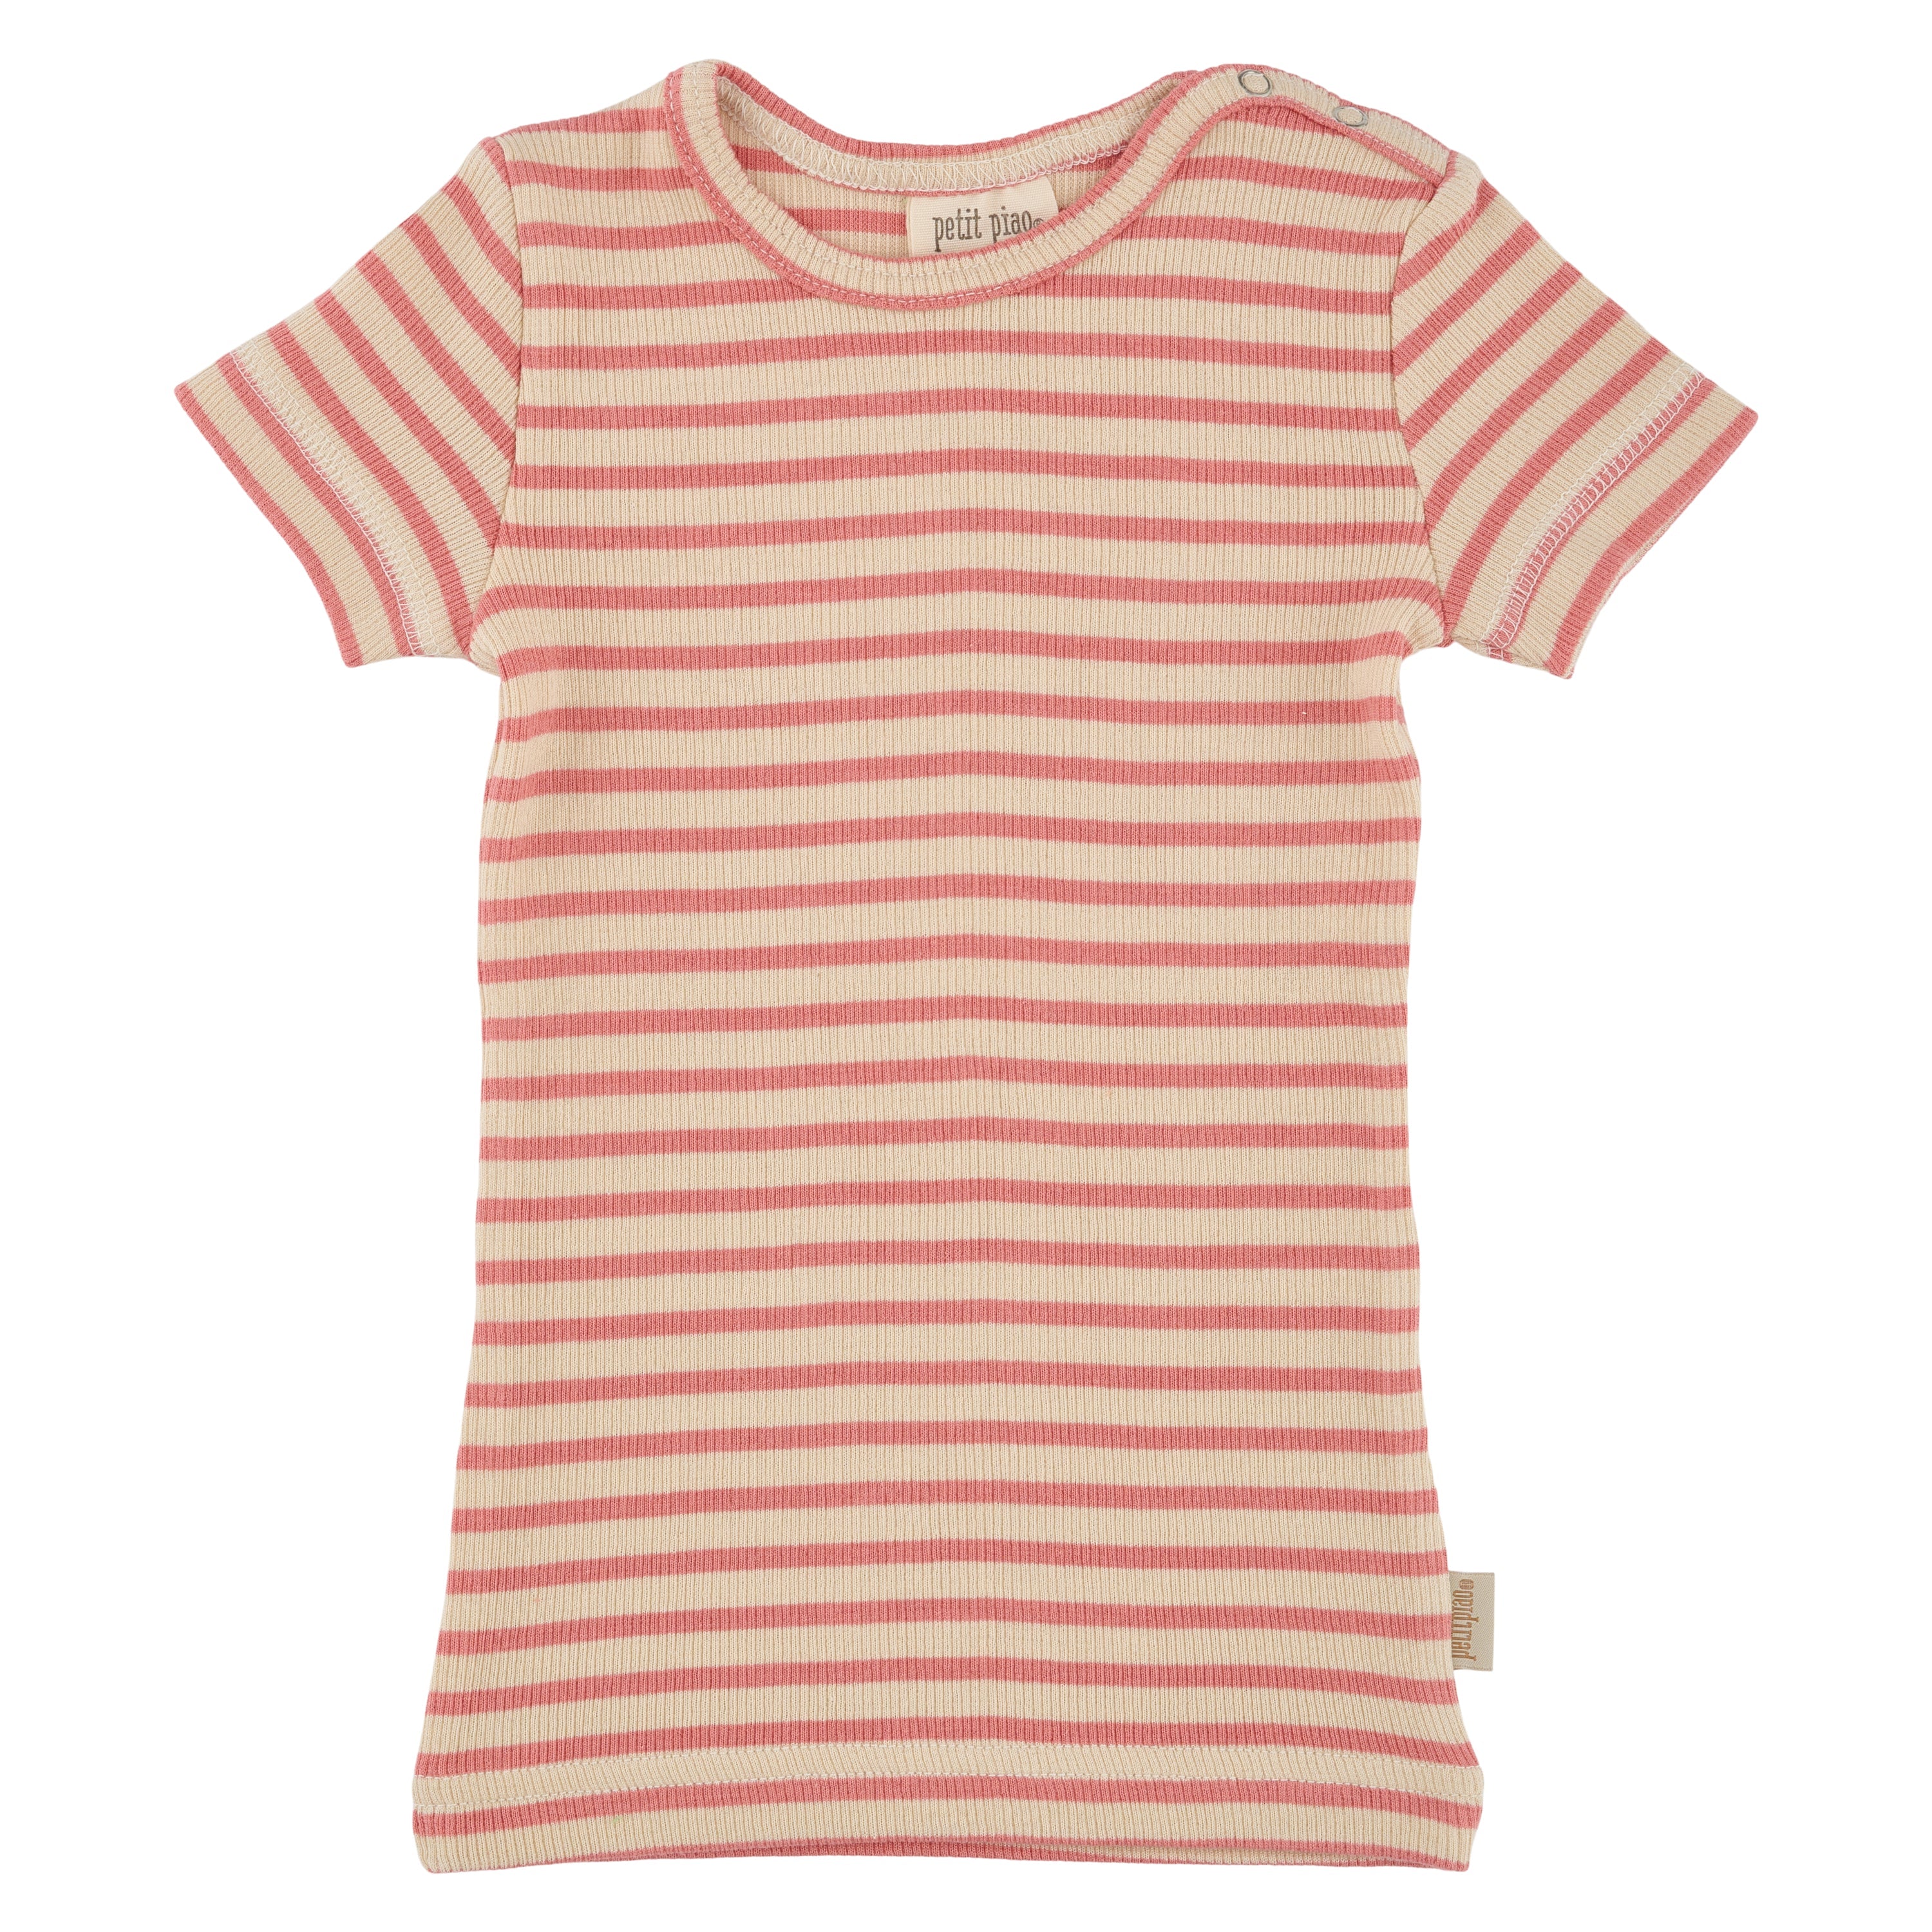 Petit Piao T-shirt - Modal Striped- Dark Peach/Cream